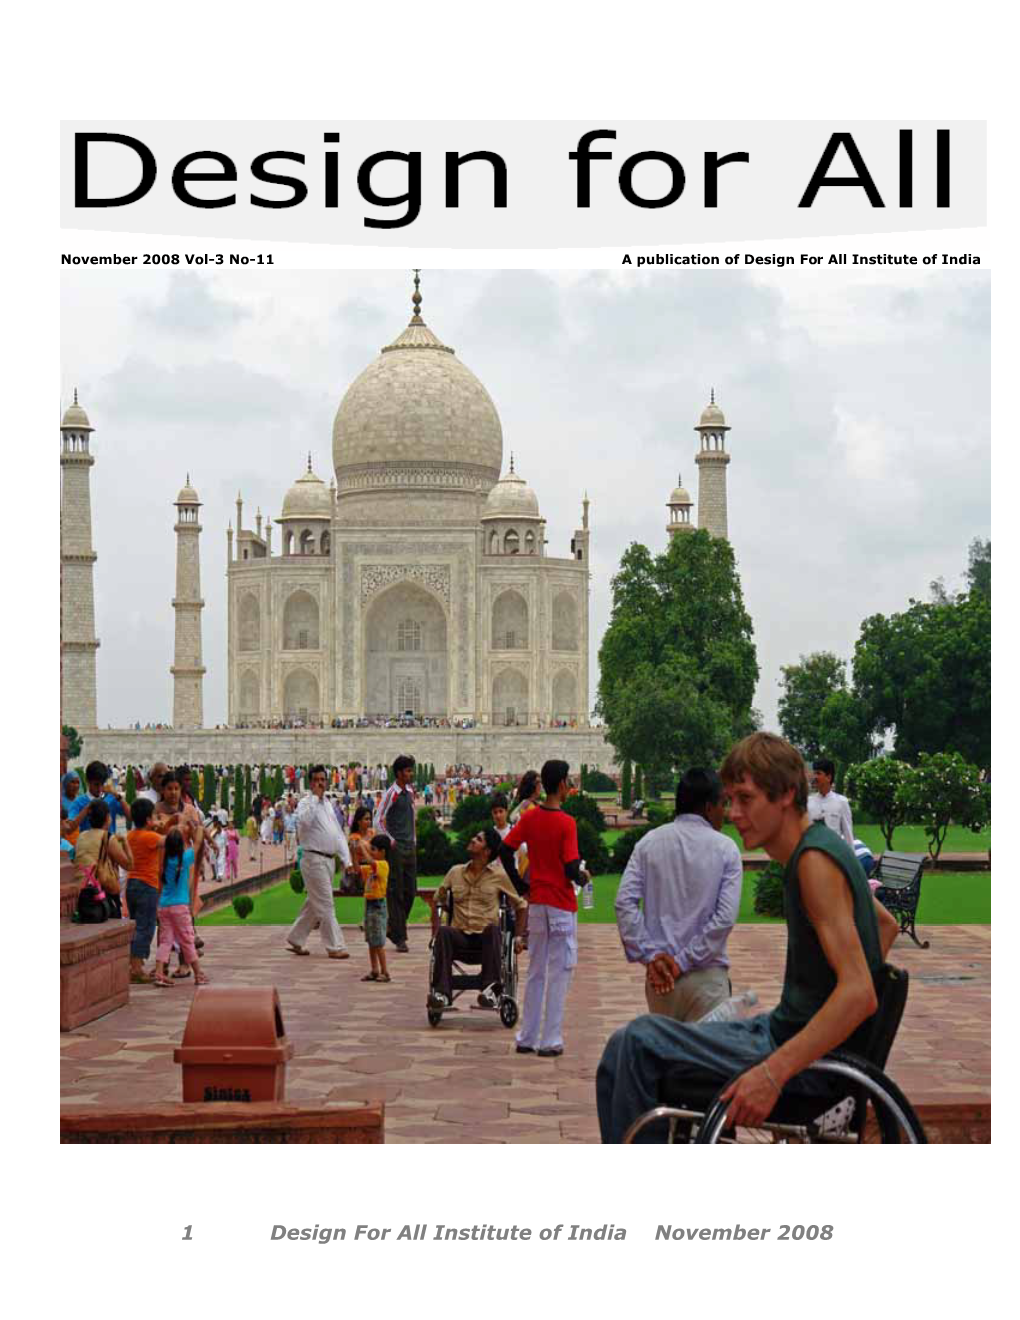 1 Design for All Institute of India November 2008